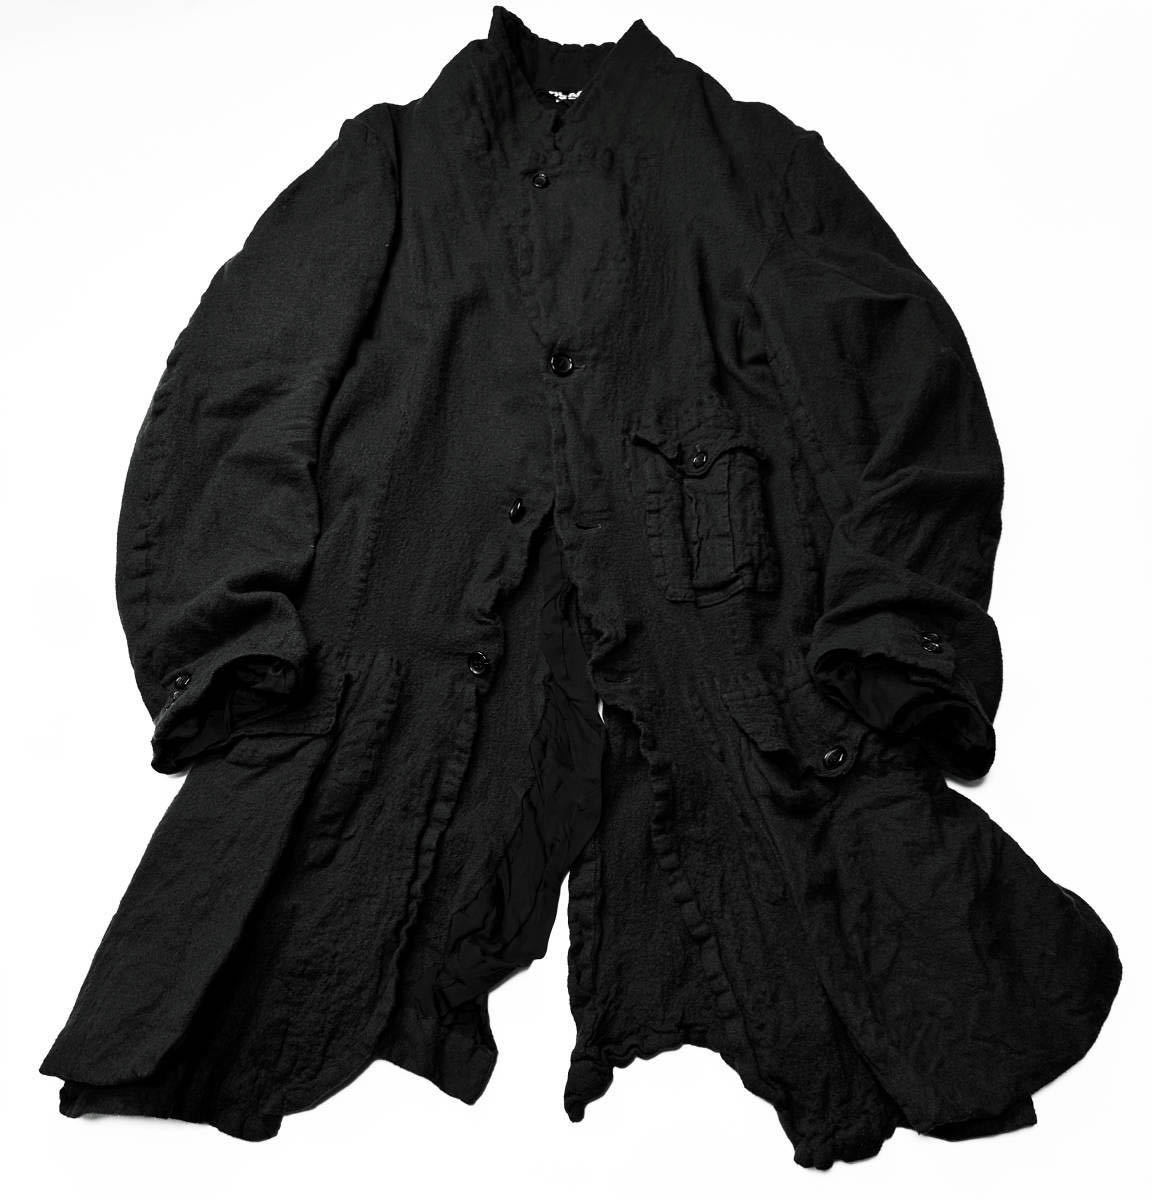 94AW переиздание шерсть .. длинный cargo жакет Comme des Garcons BLACK 20AW 2020AW Boiled Wool Jacket HOMME PLUS Homme pryus1994AW